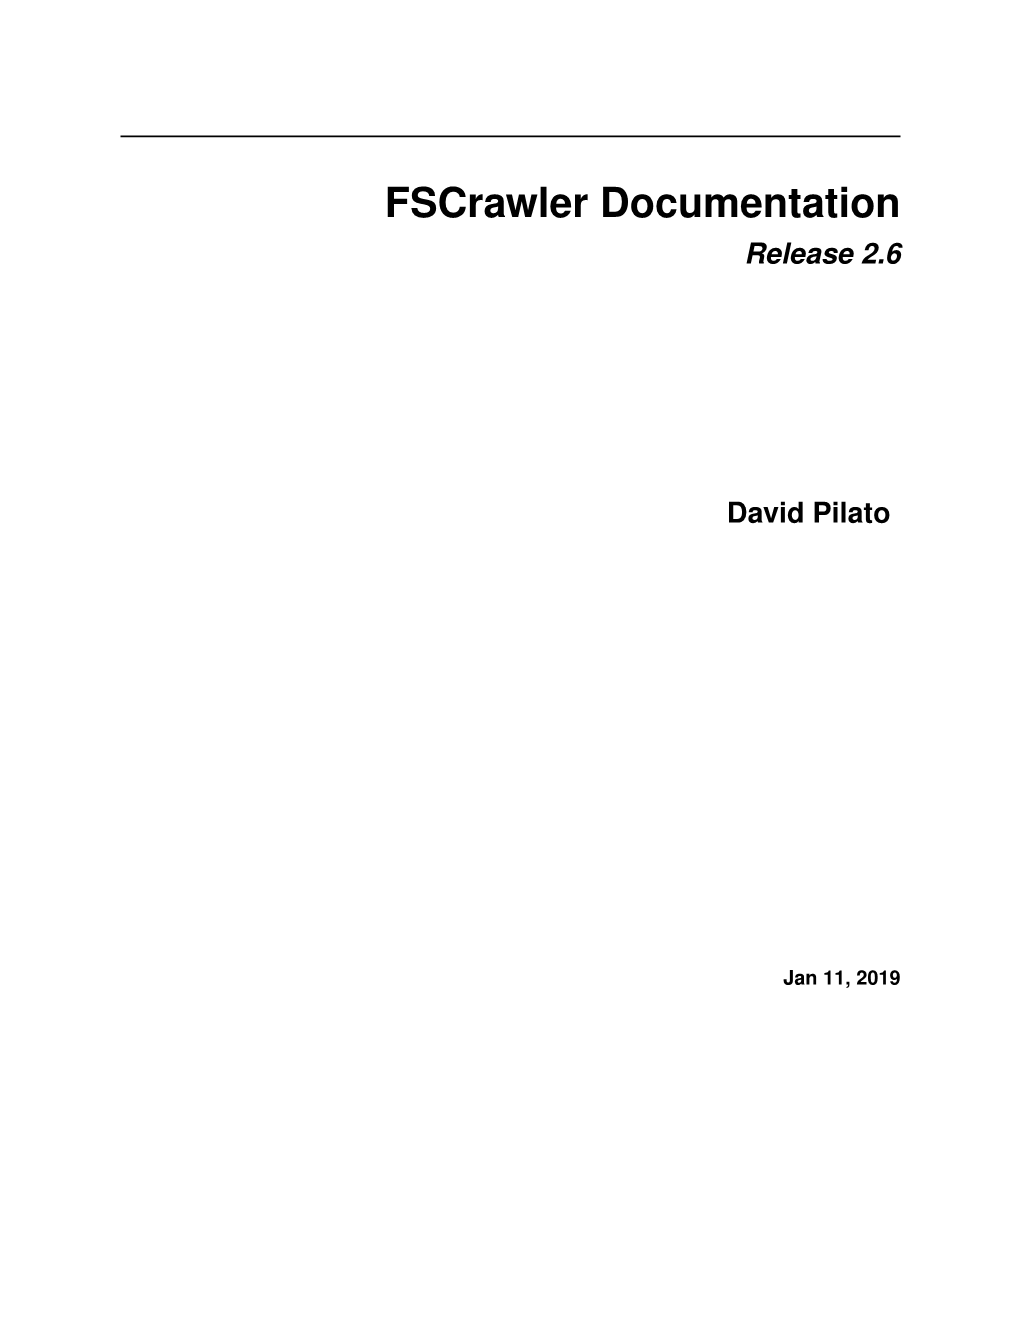 Fscrawler Documentation Release 2.6 David Pilato